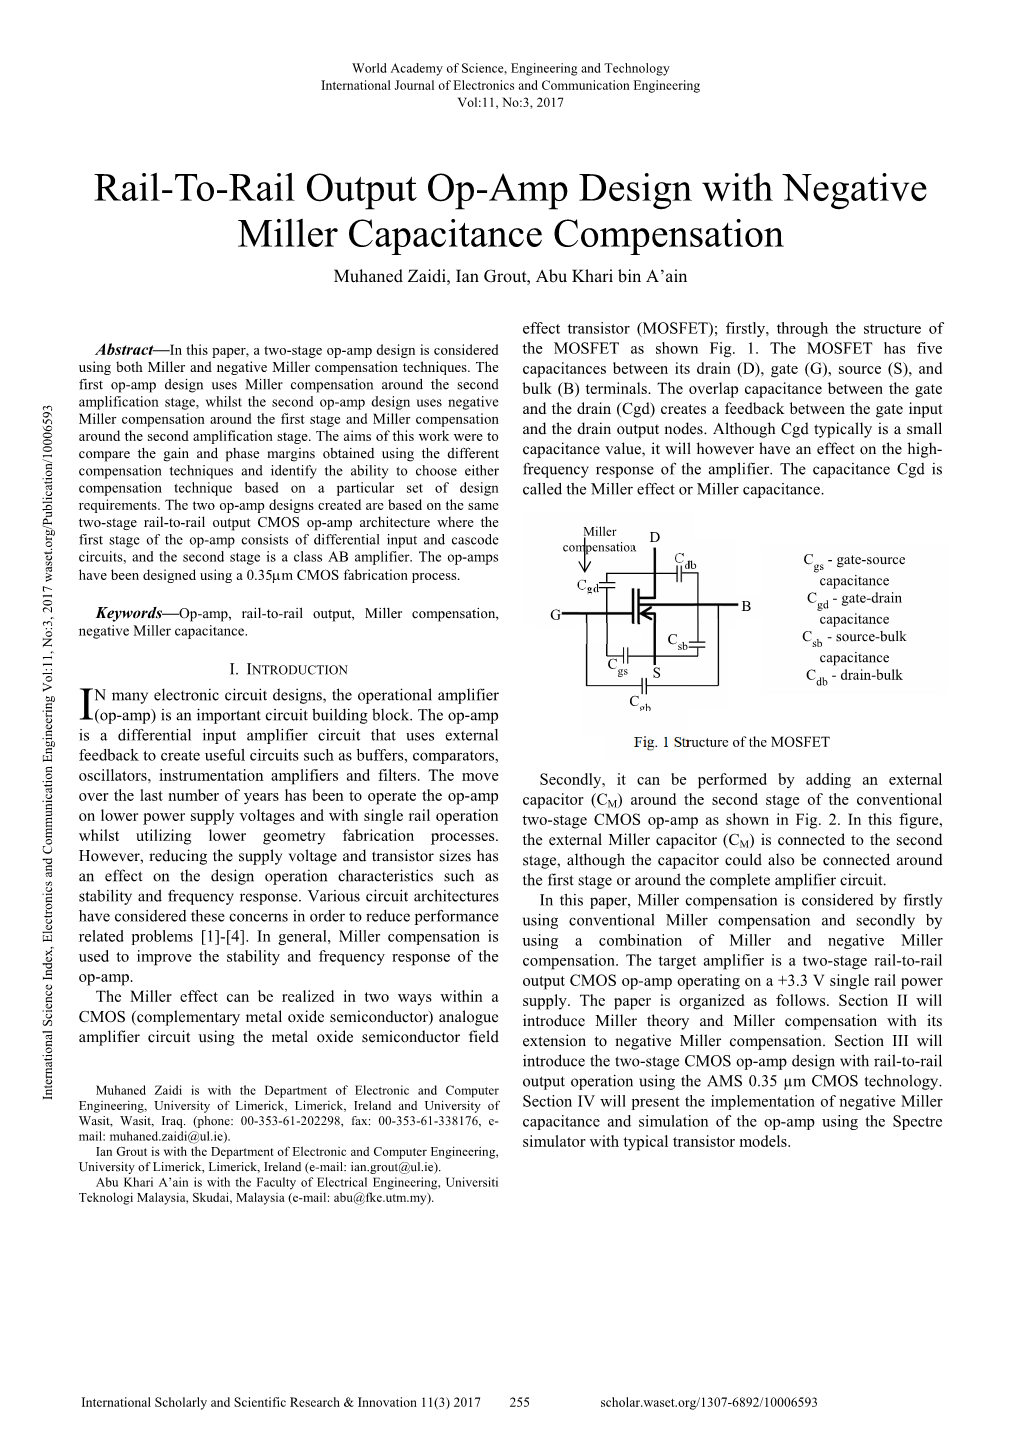 Rail-To-Rail Output Op-Amp Design with Negative Miller Capacitance Compensation Muhaned Zaidi, Ian Grout, Abu Khari Bin A’Ain